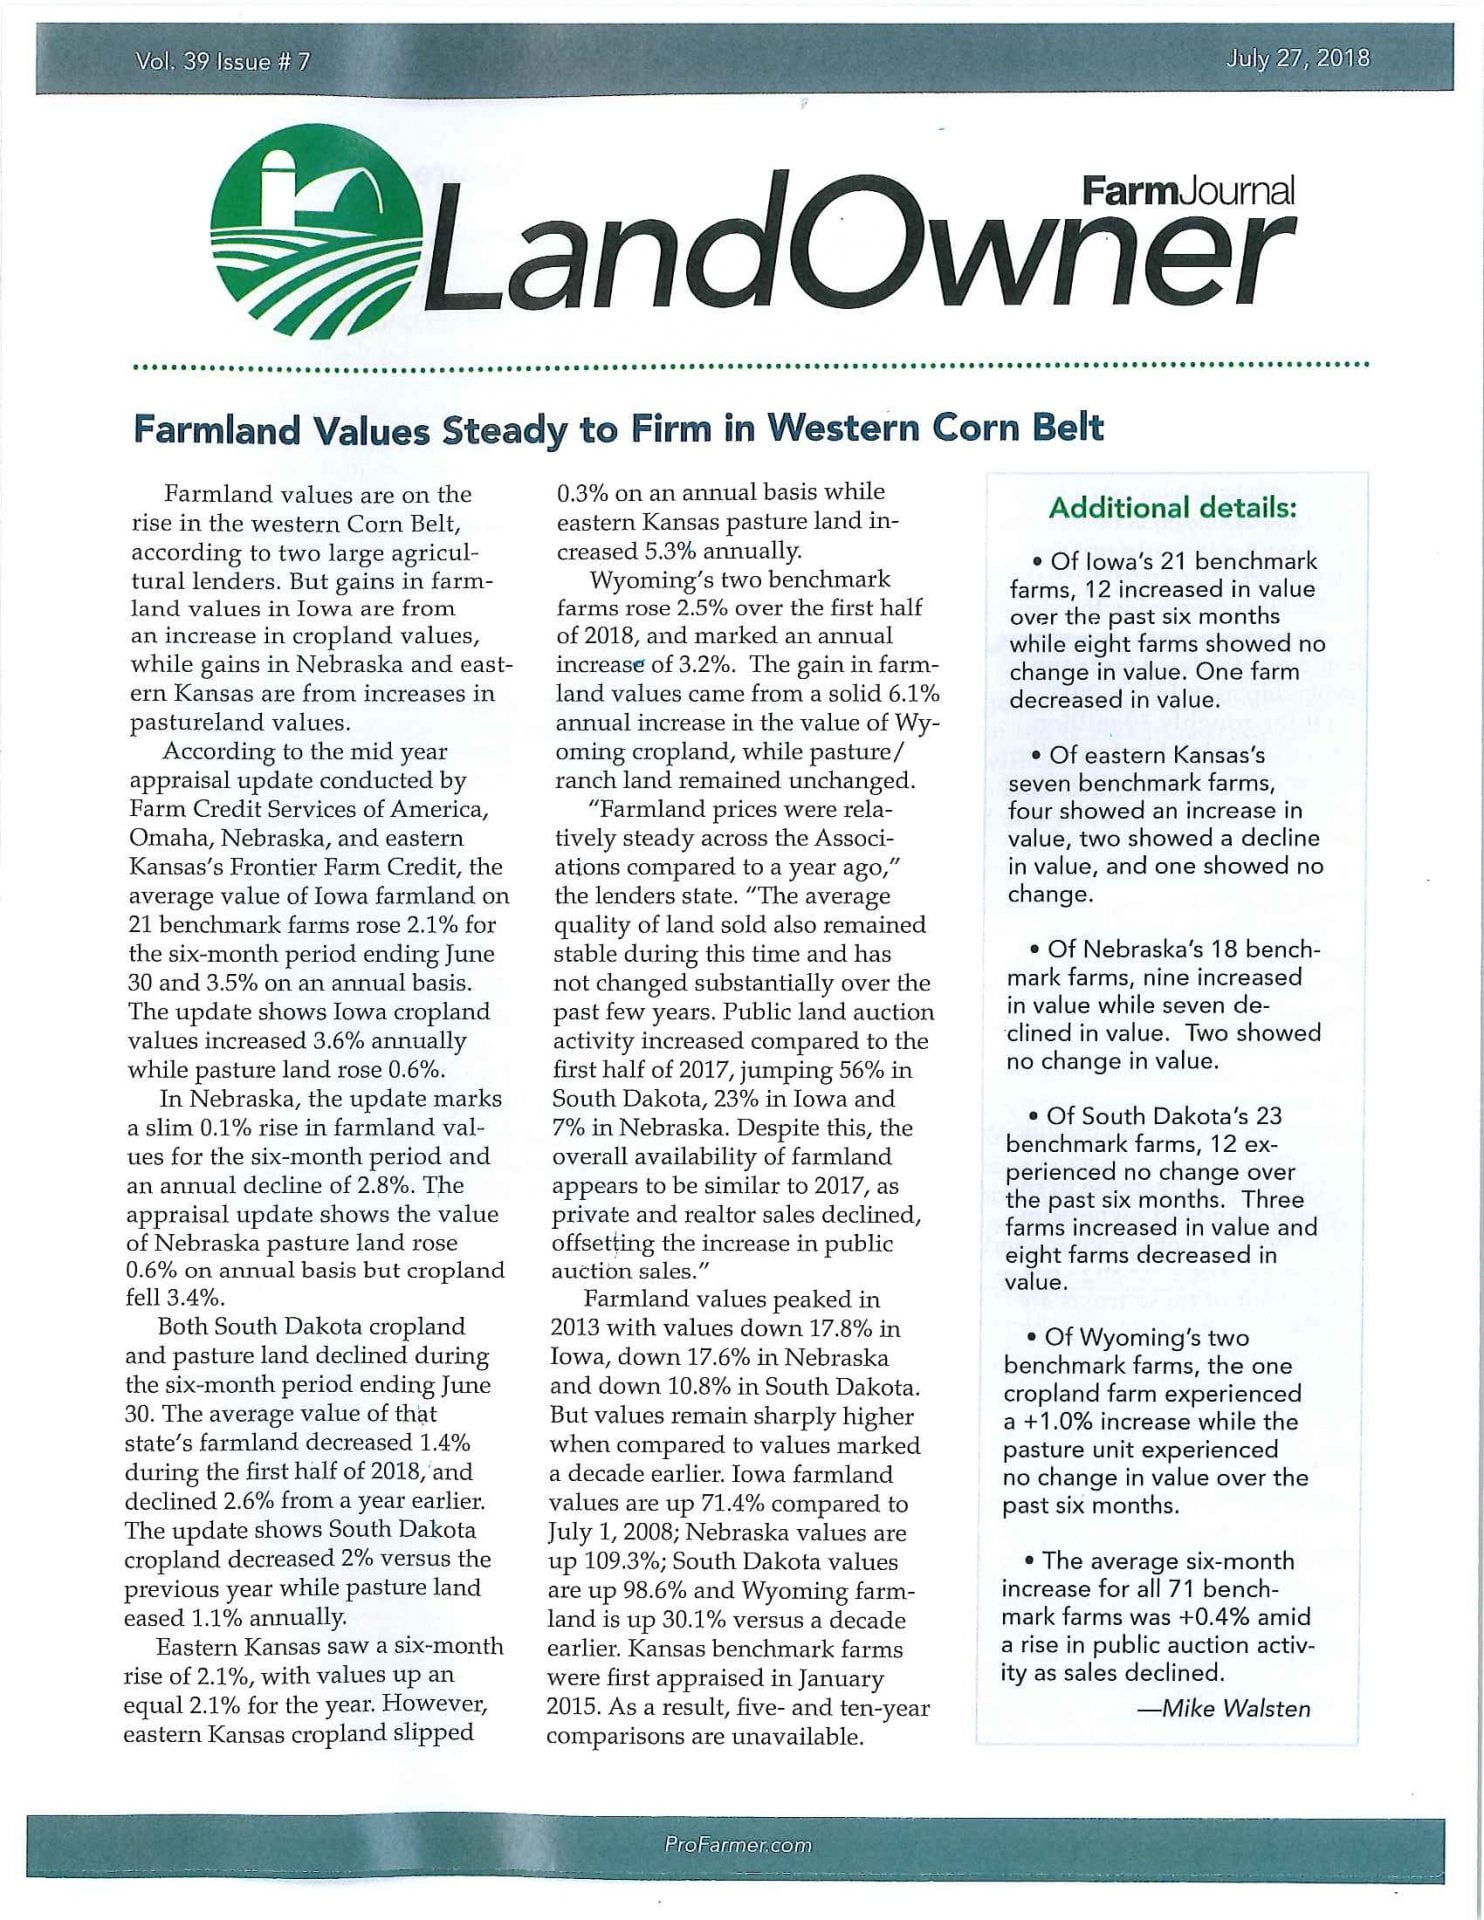 LandOwner 7-27-18_Page_1